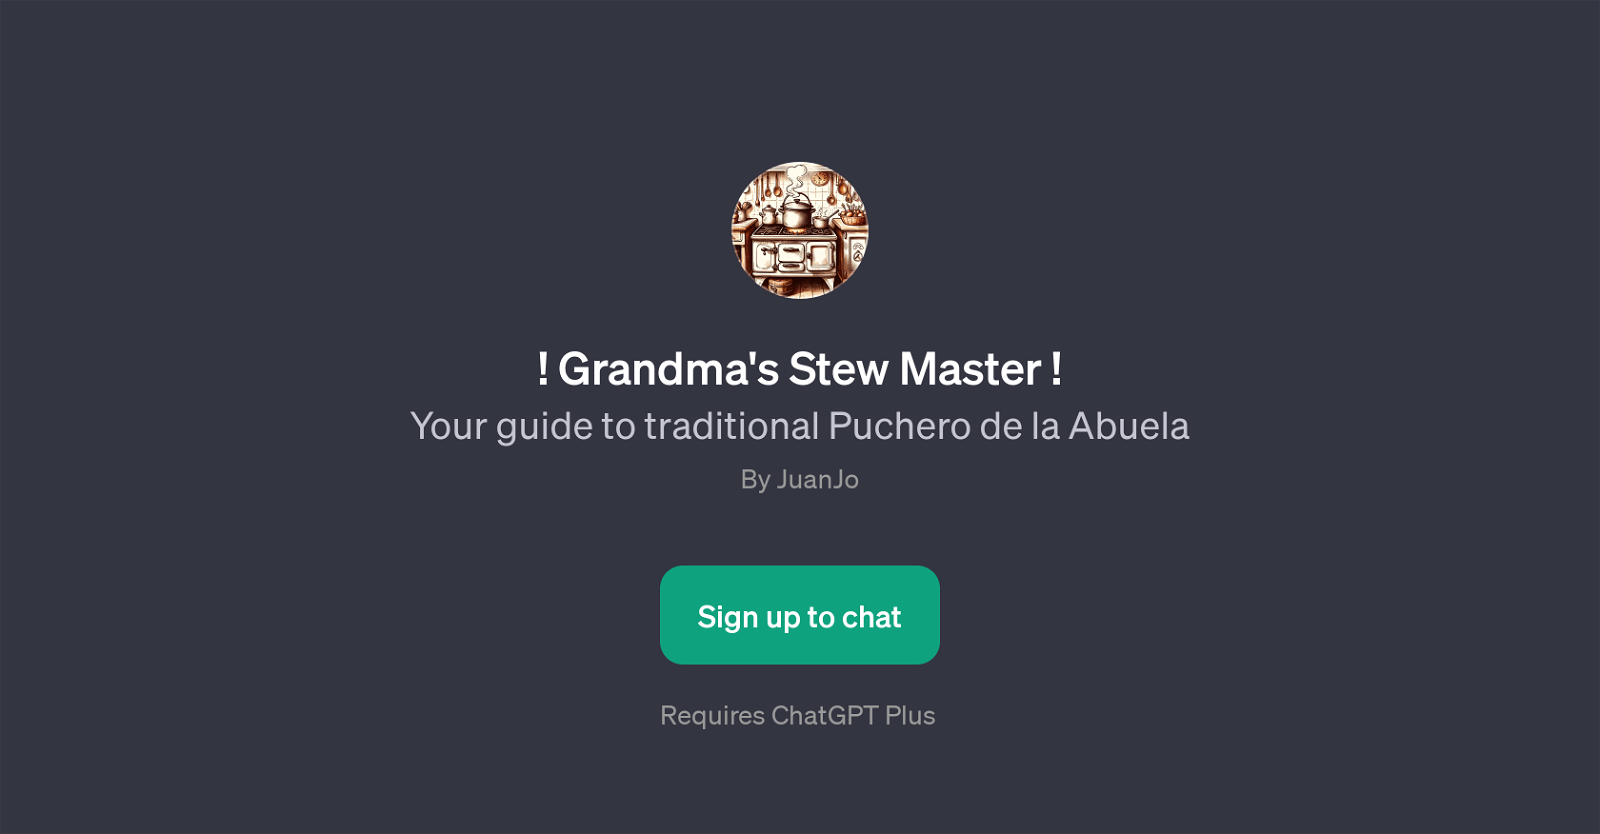 Grandma's Stew Master website